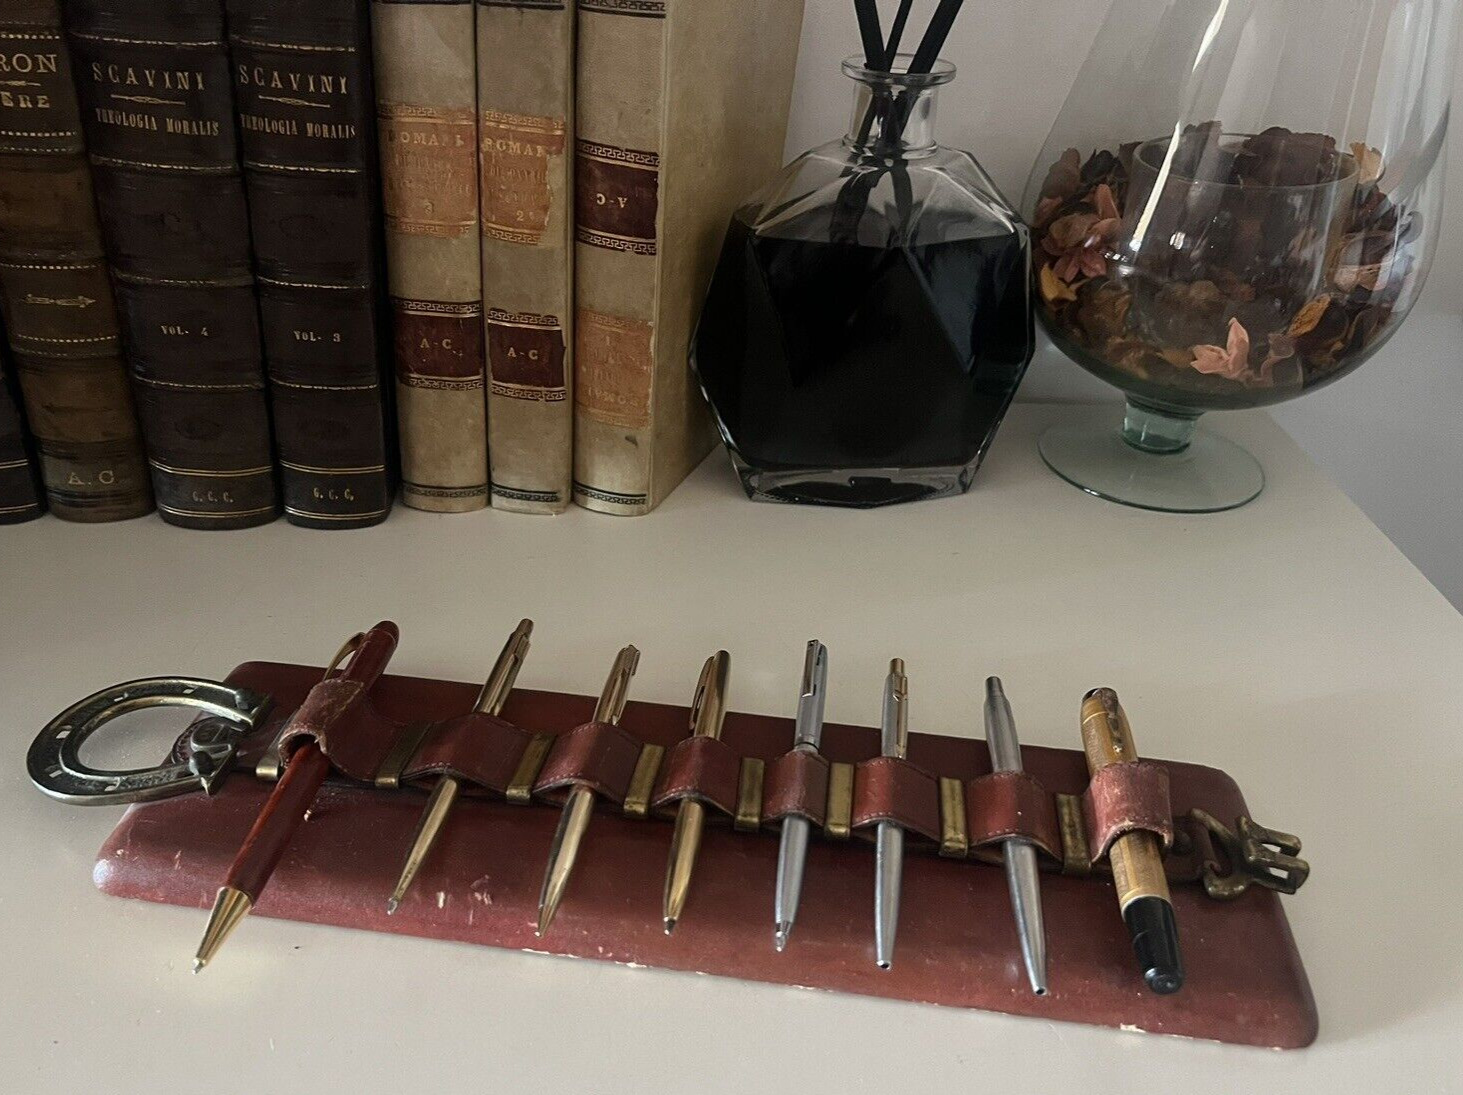 ETIENNE AIGNER Pen Holder - Desk Or Wall Leather Iron Horse Vintage